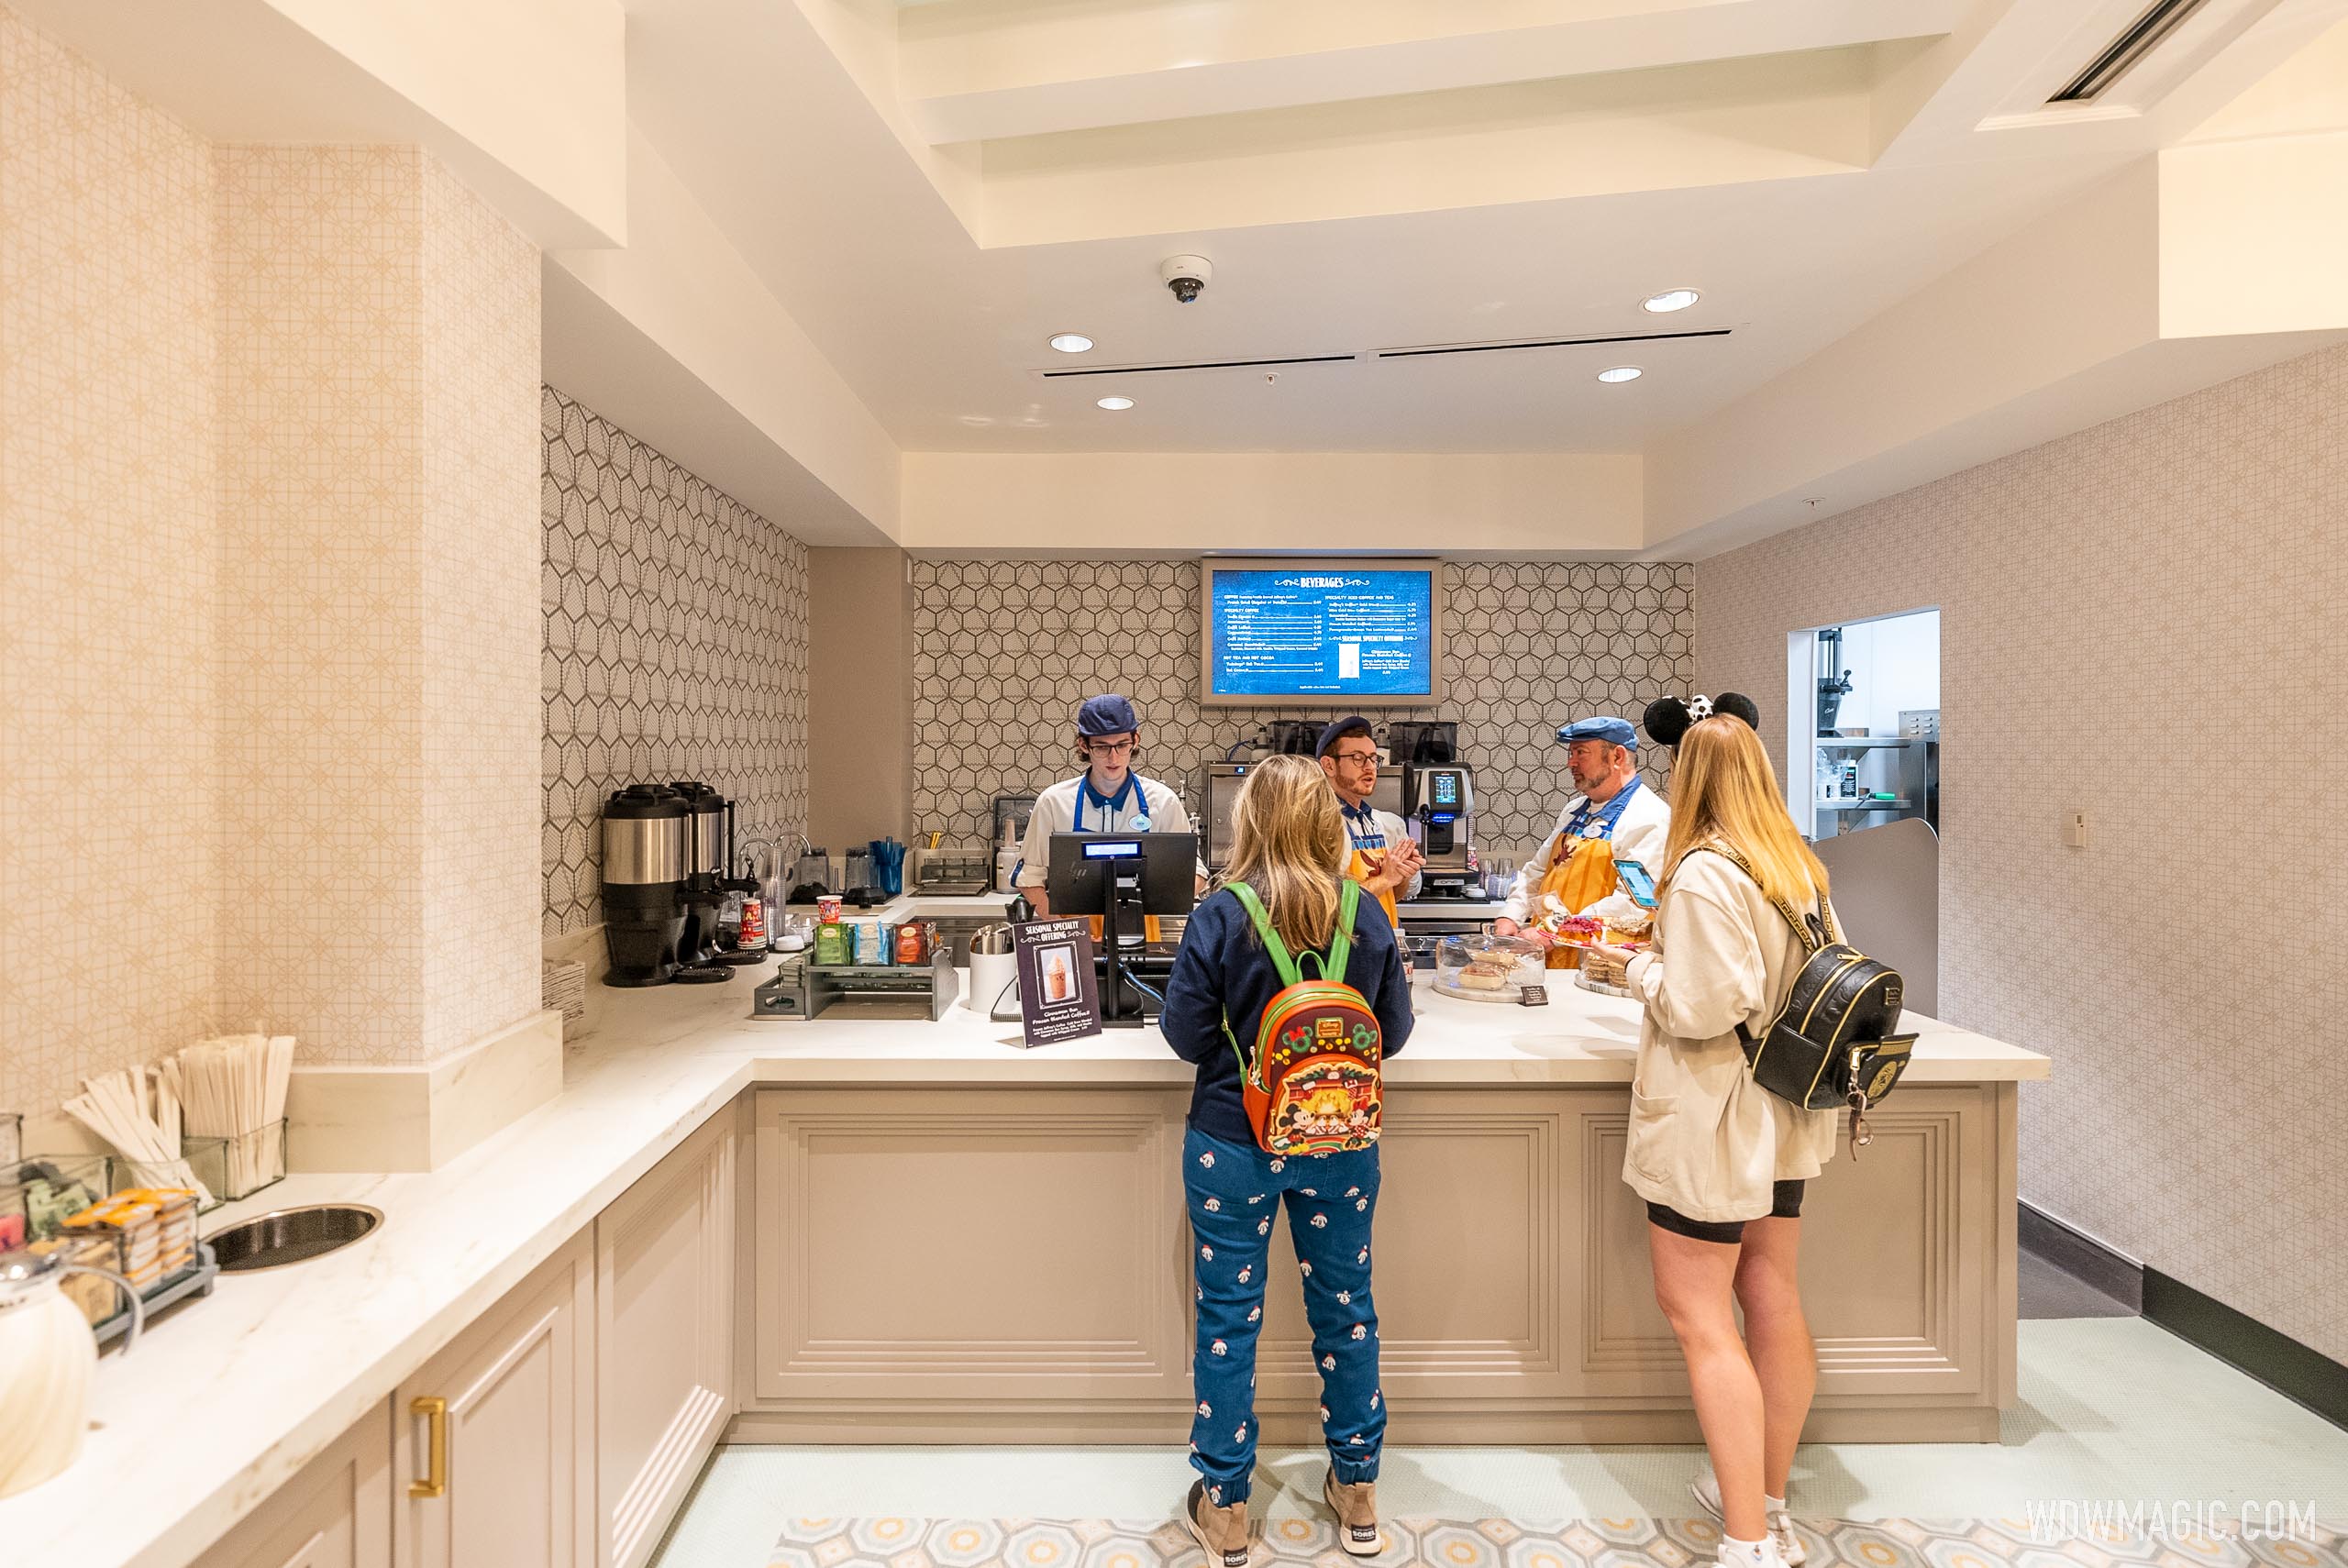 A look inside the new ‘Carousel Coffee’ at Disney’s BoardWalk Inn